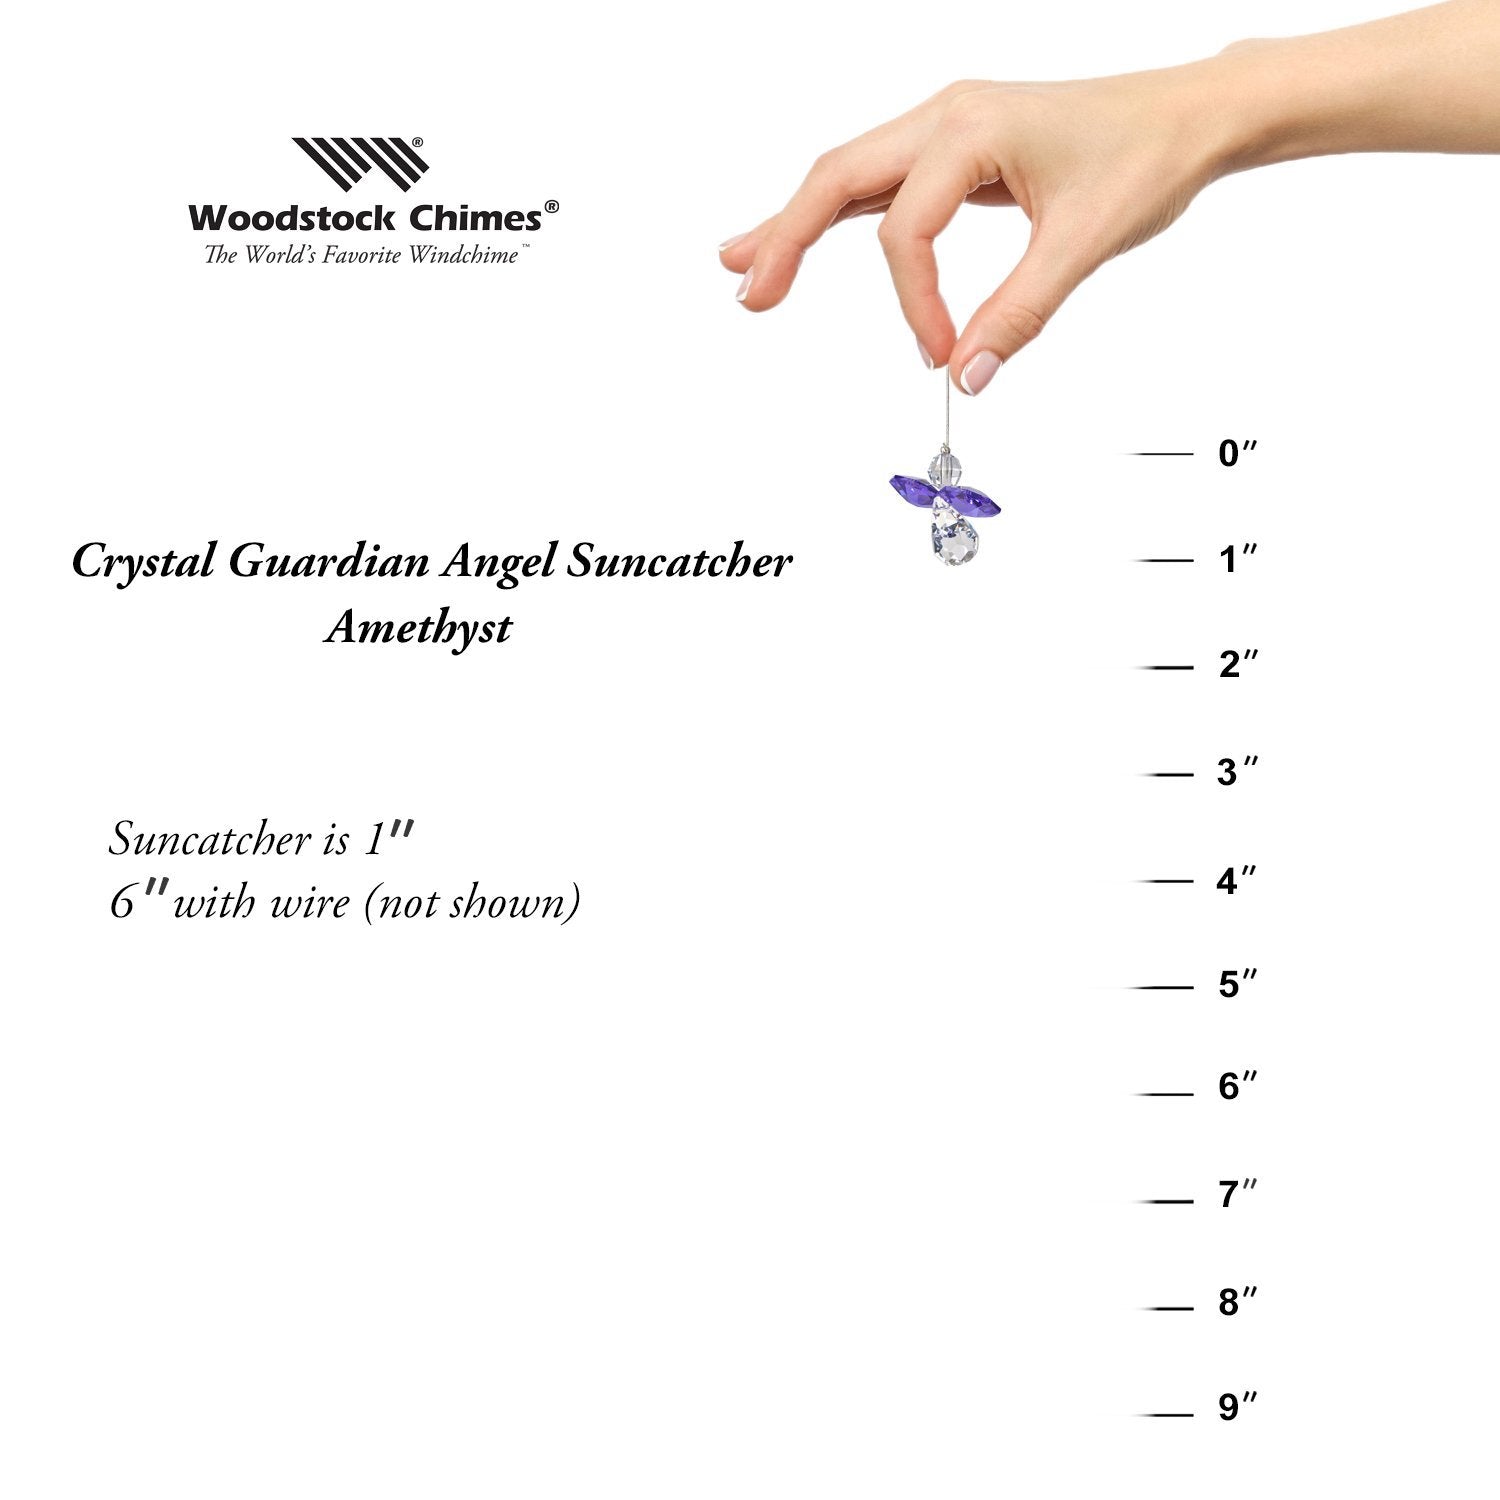 Crystal Guardian Angel Suncatcher - Amethyst (February) proportion image